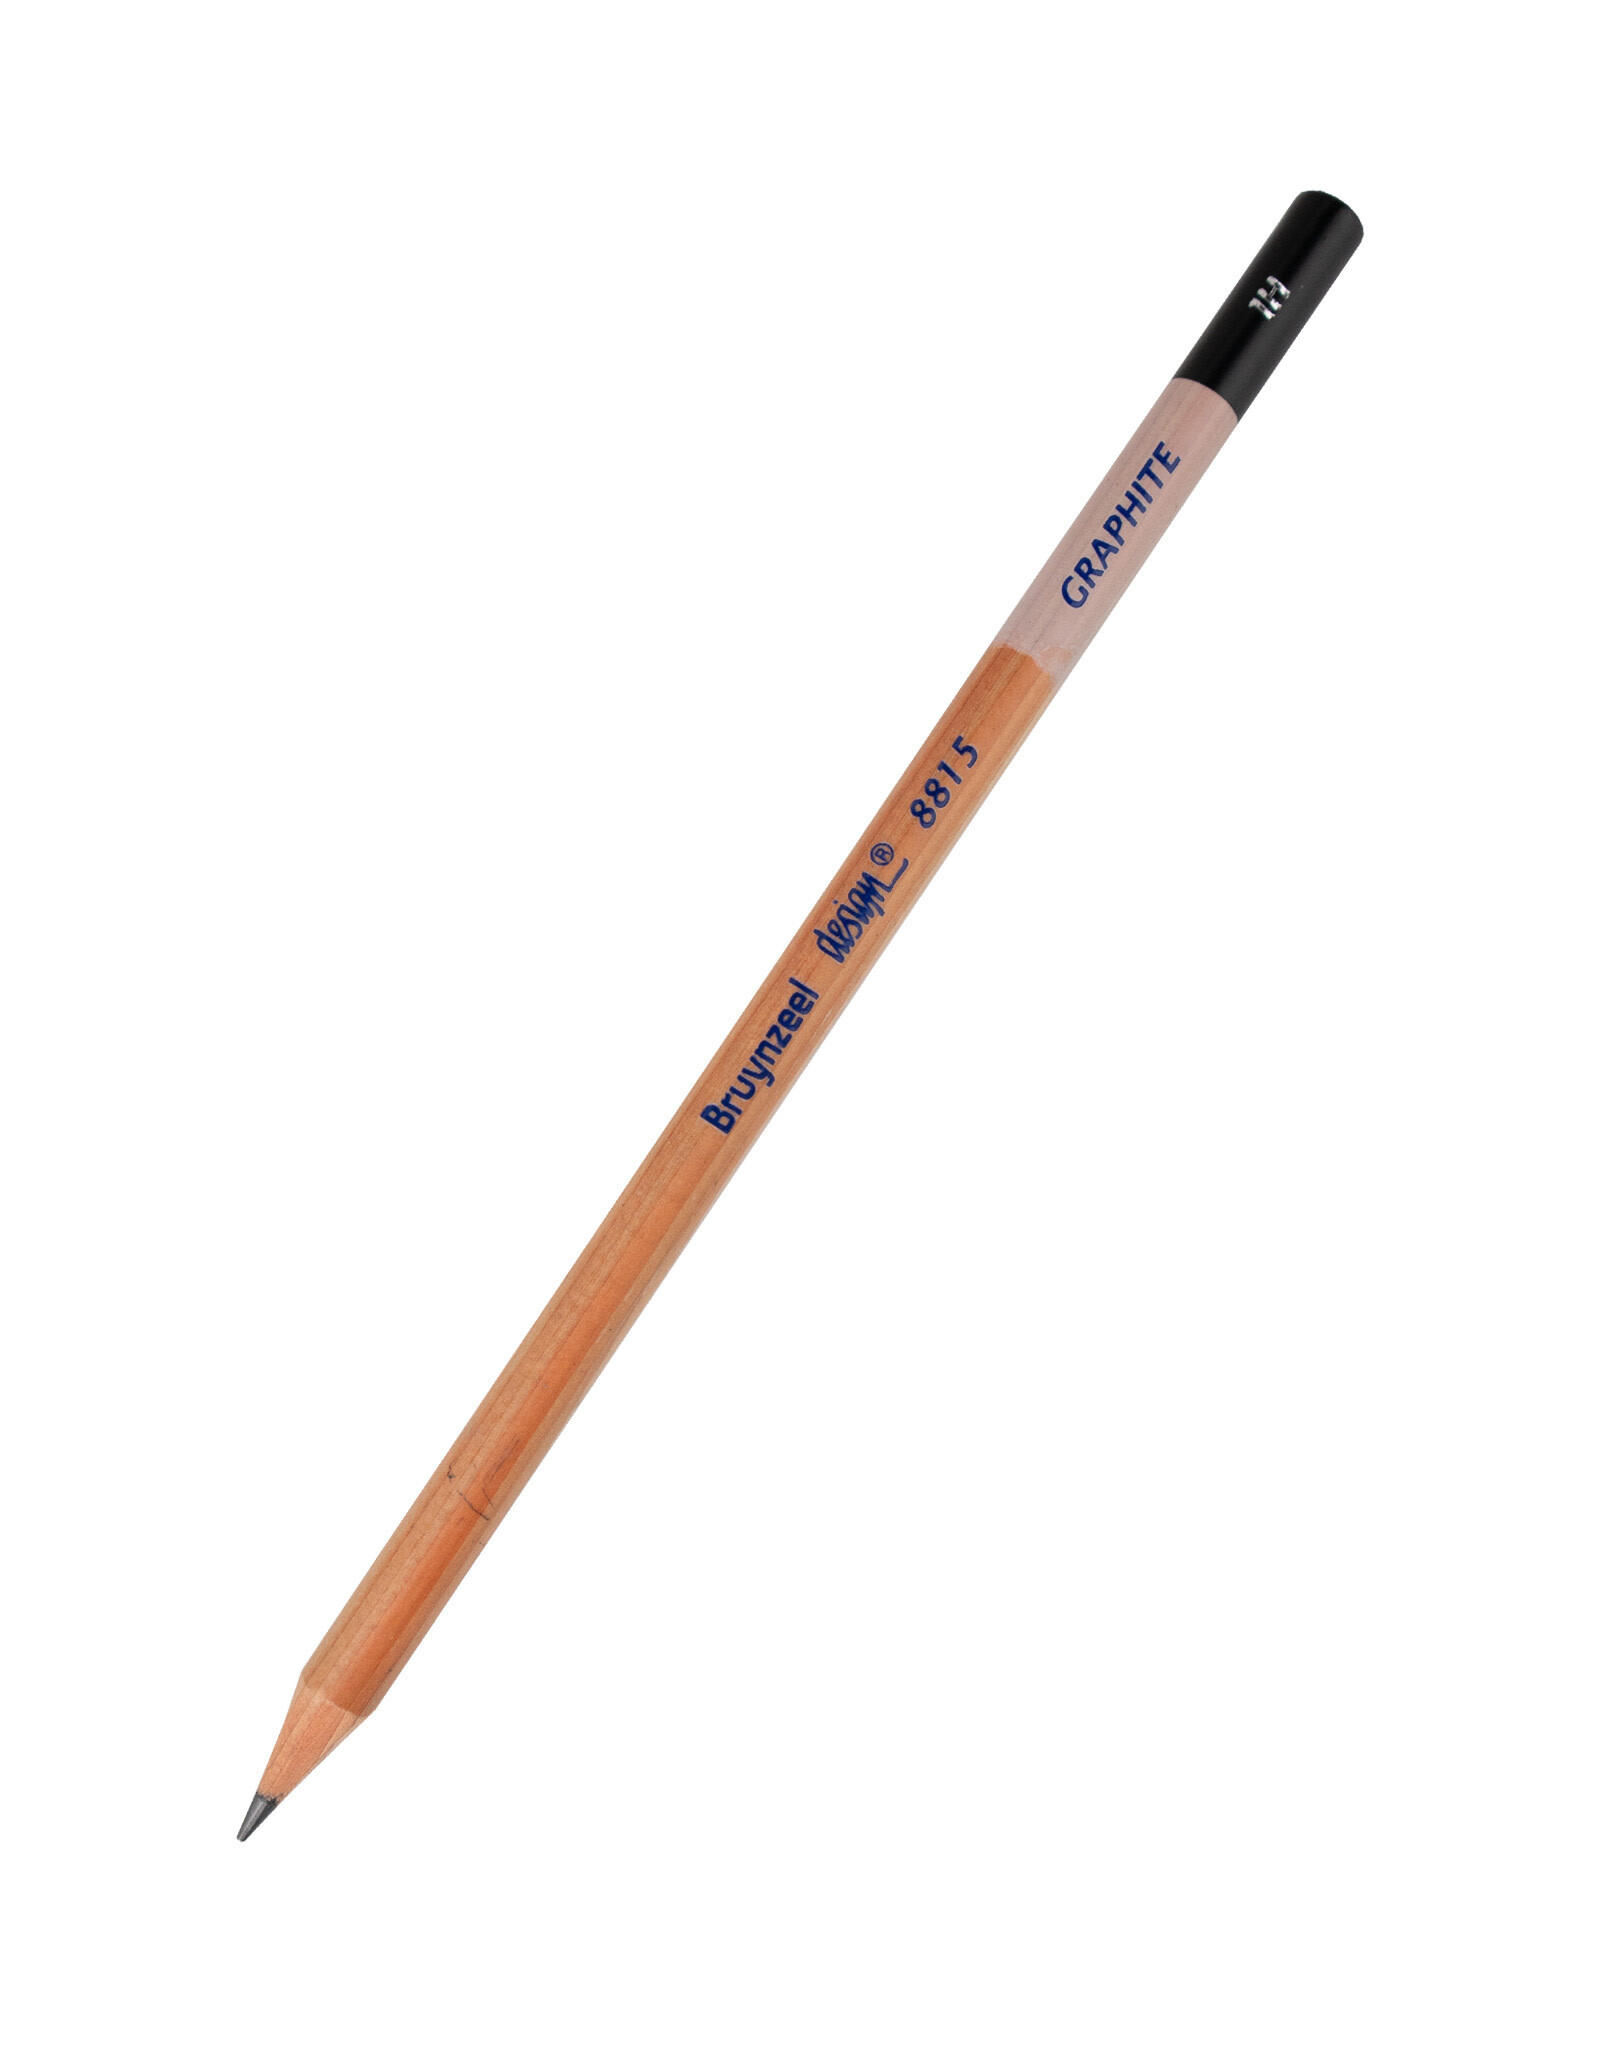 Royal Talens Bruynzeel Design Graphite Pencil, 1H